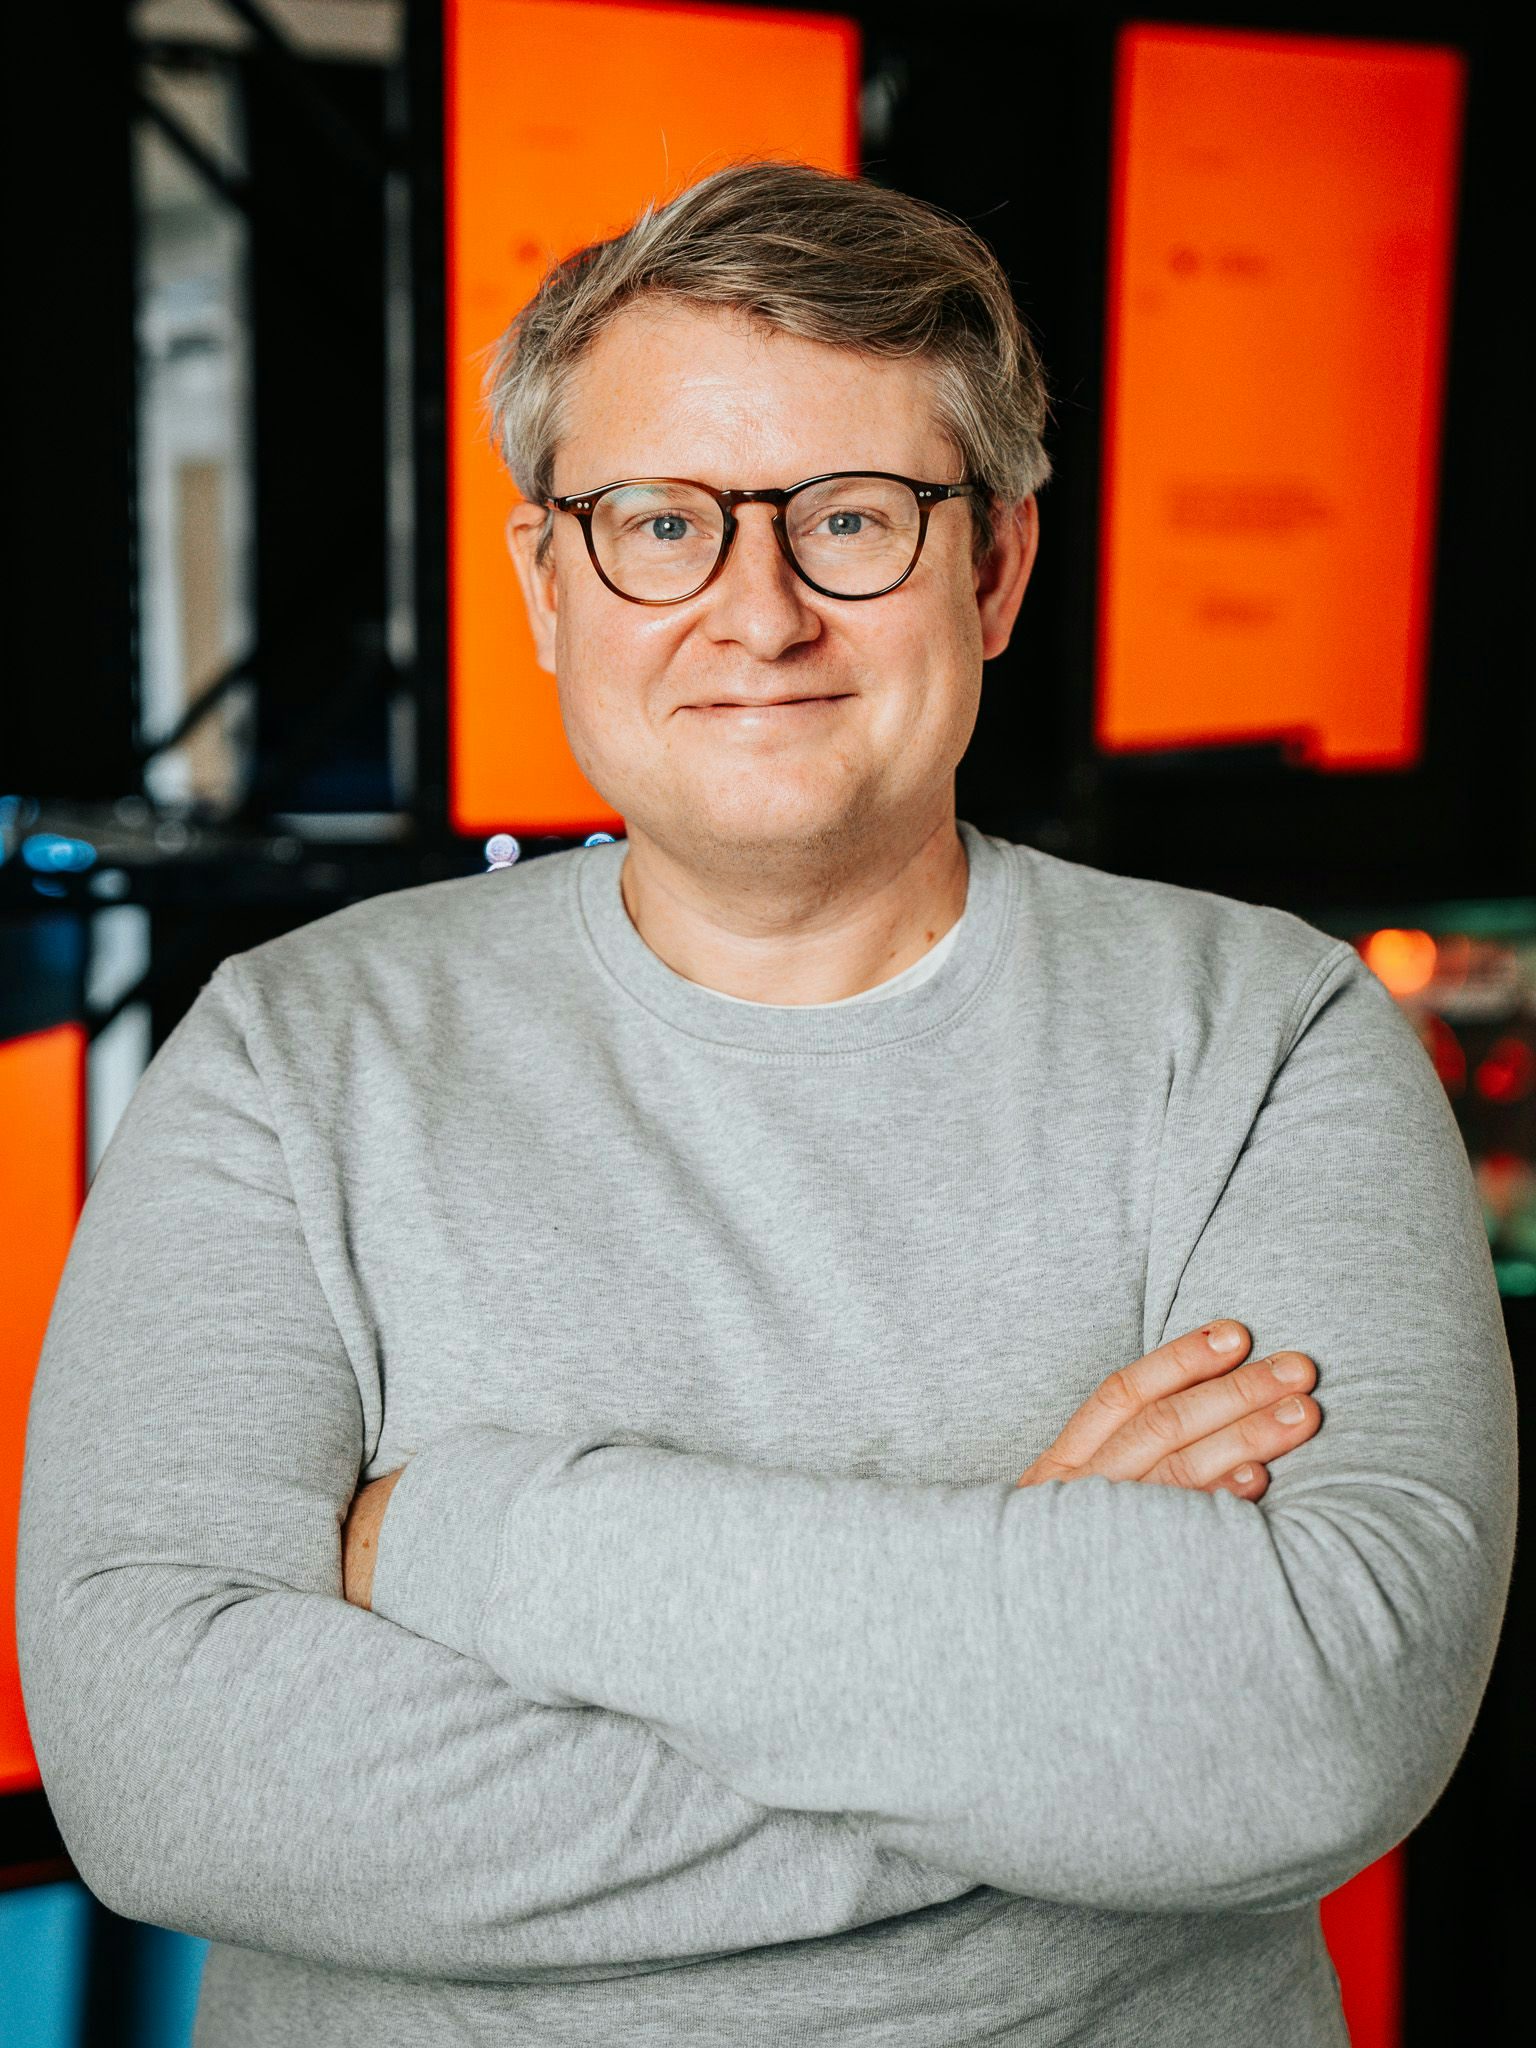 Johan Mjönes